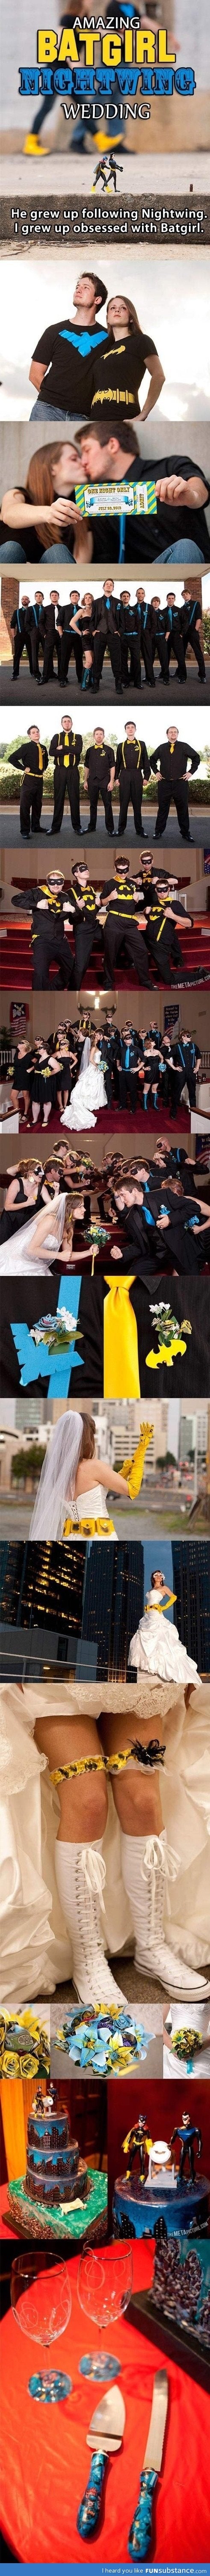 Most epic wedding - Batgirl and themed wedding